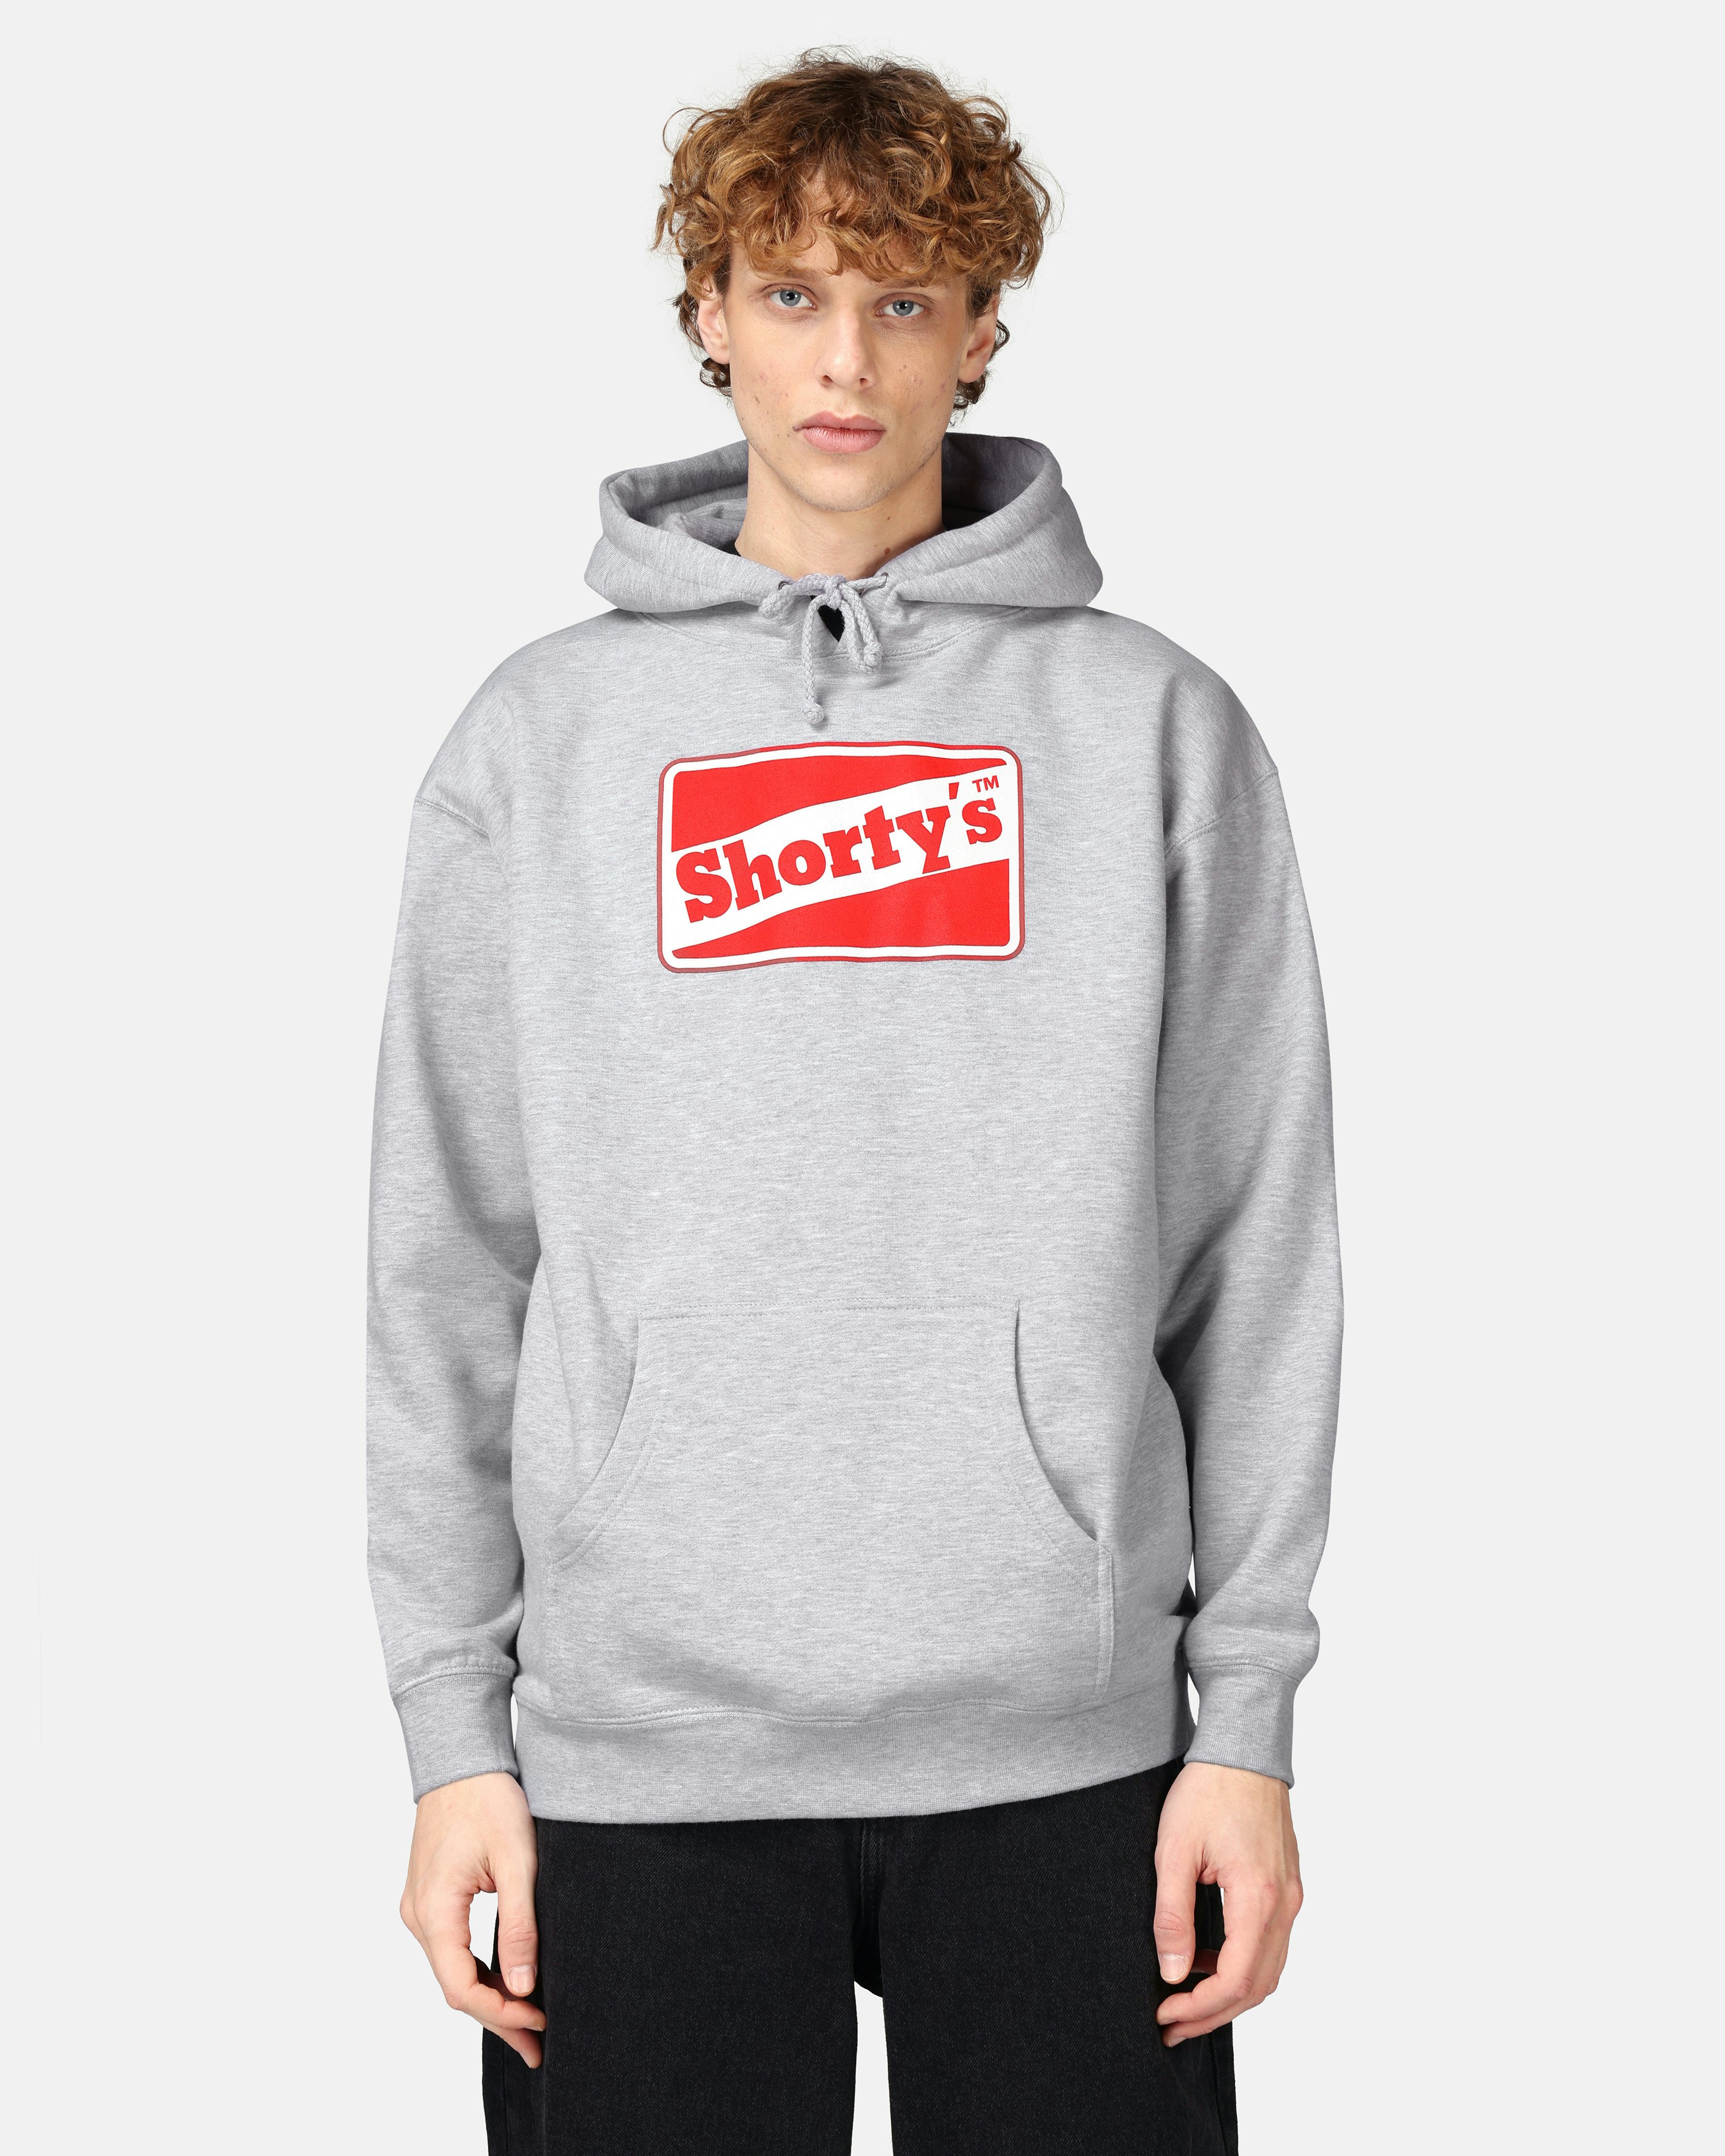 Shorty's Hoodie - OG Logo Grey | Unisex | Junkyard